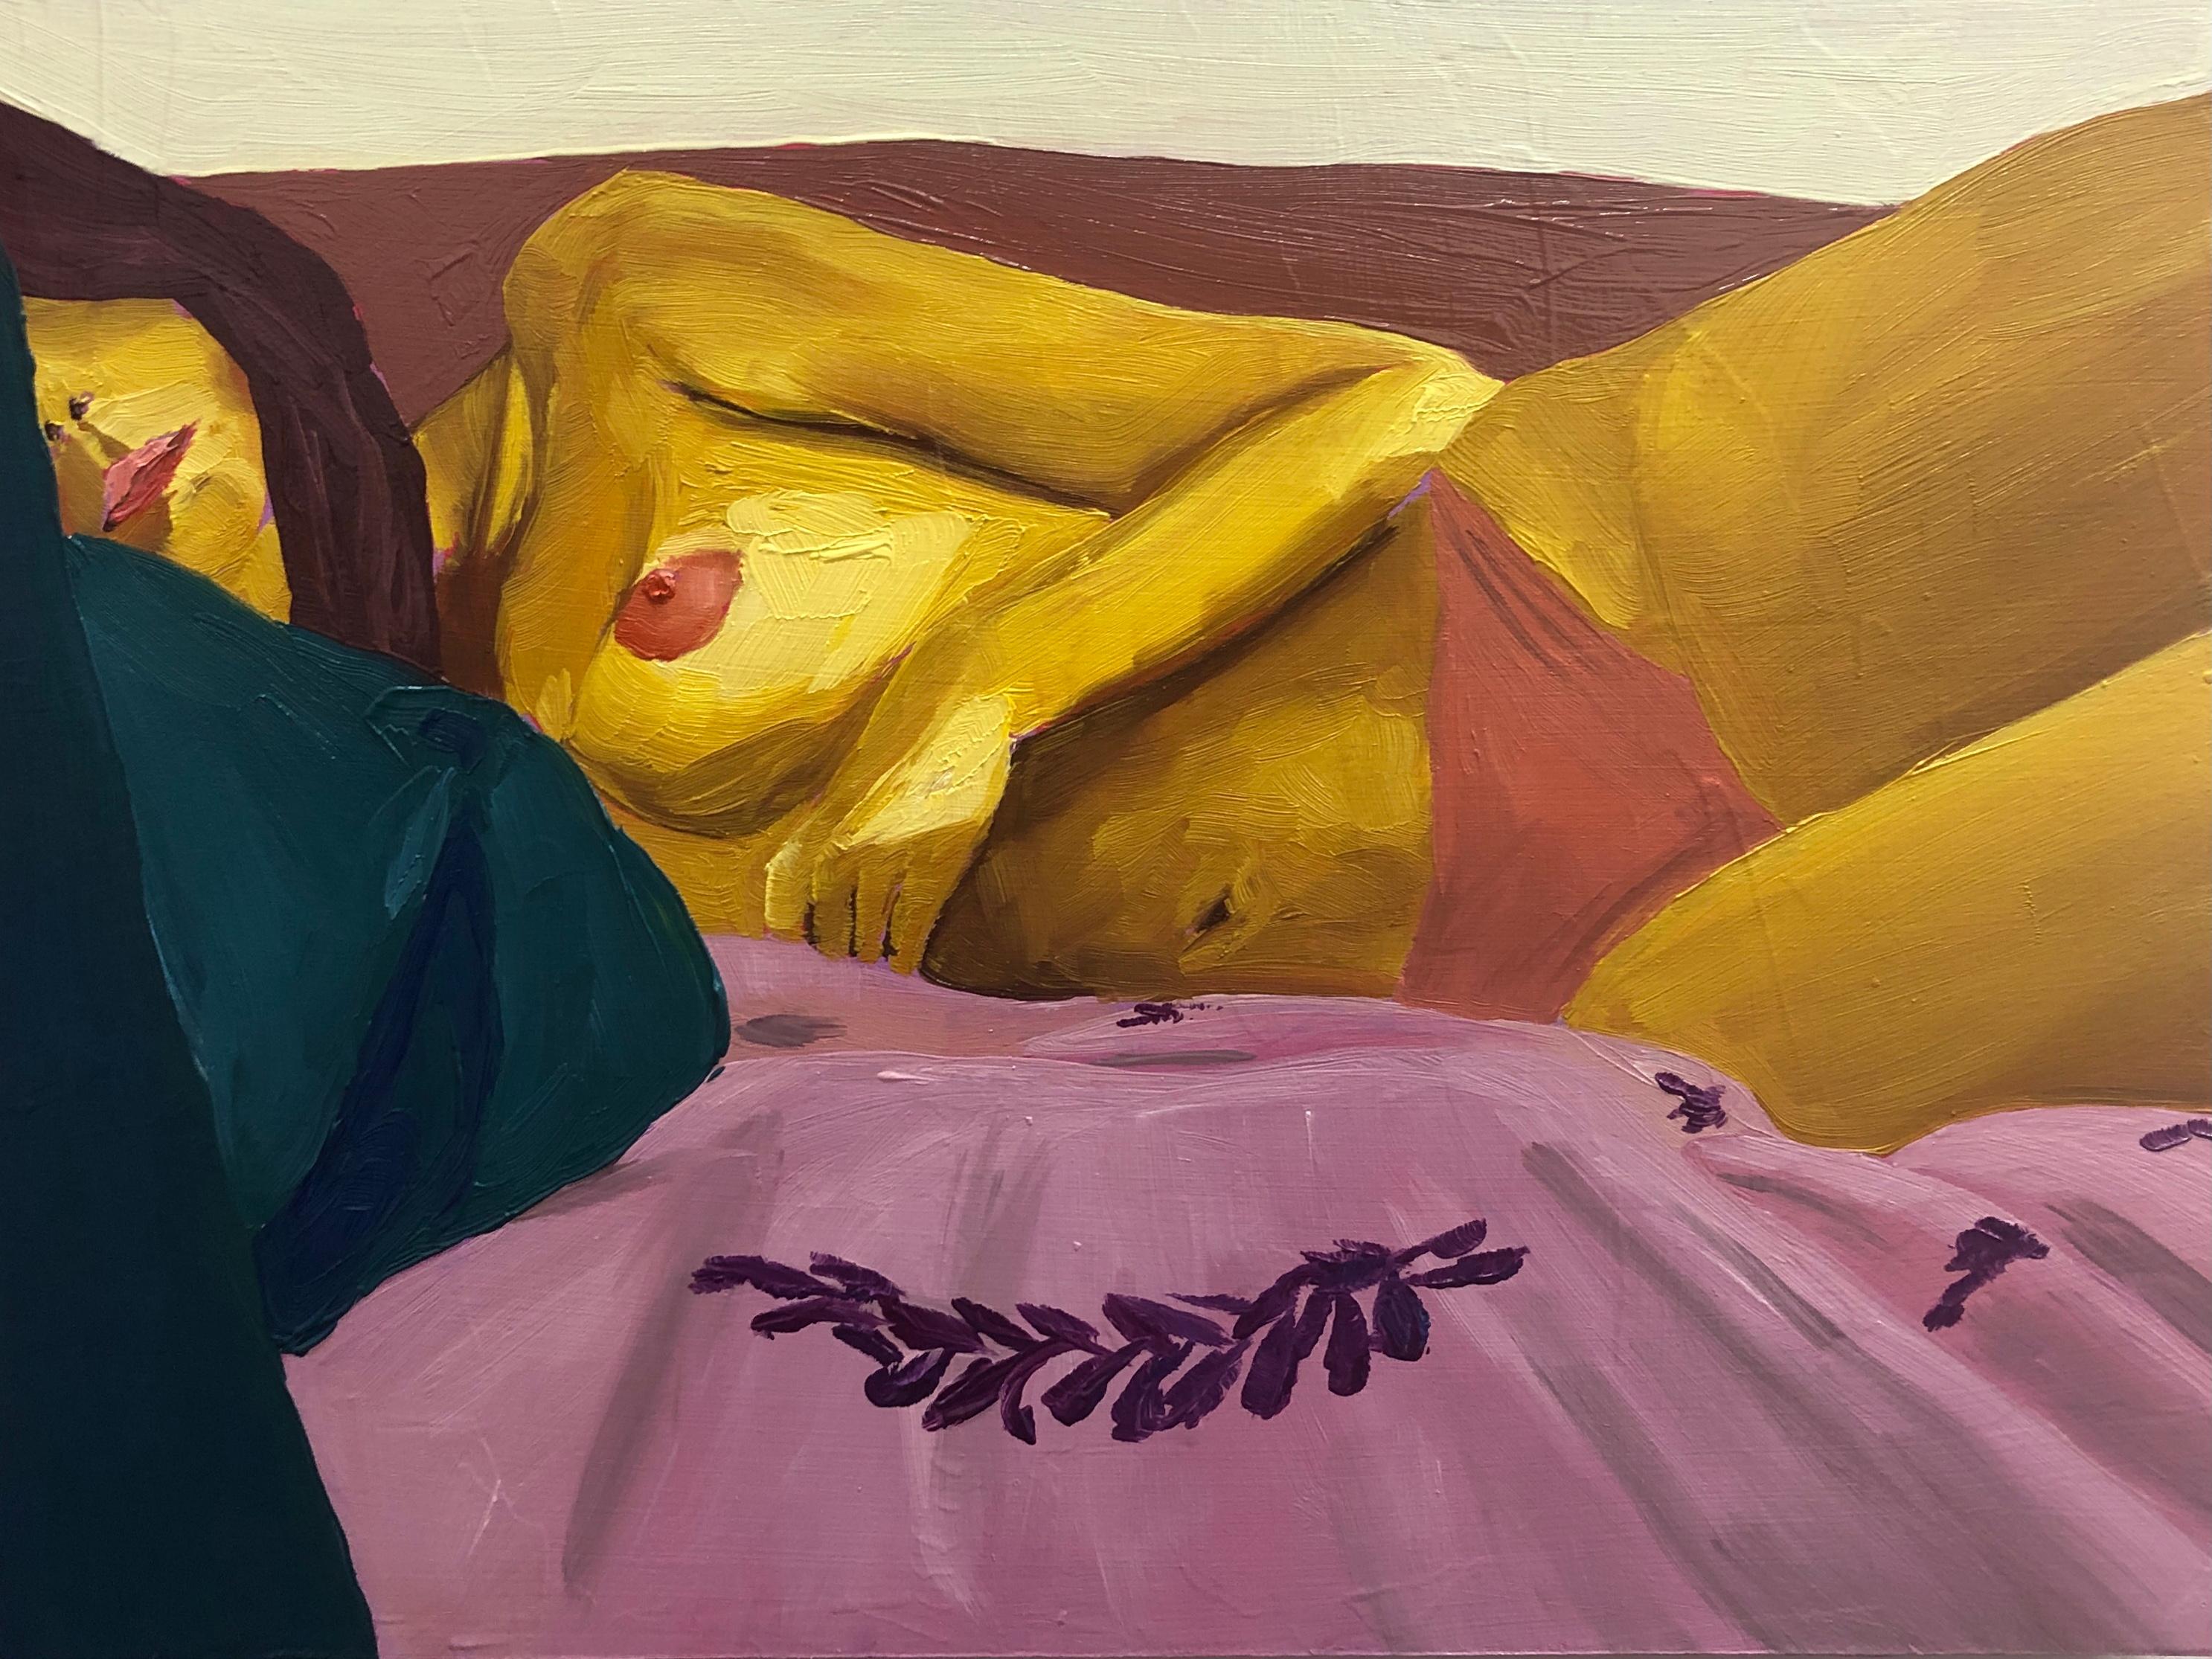 Study For Bedroom Scene 3, Oil painting on wood panel, figurative nude portrait